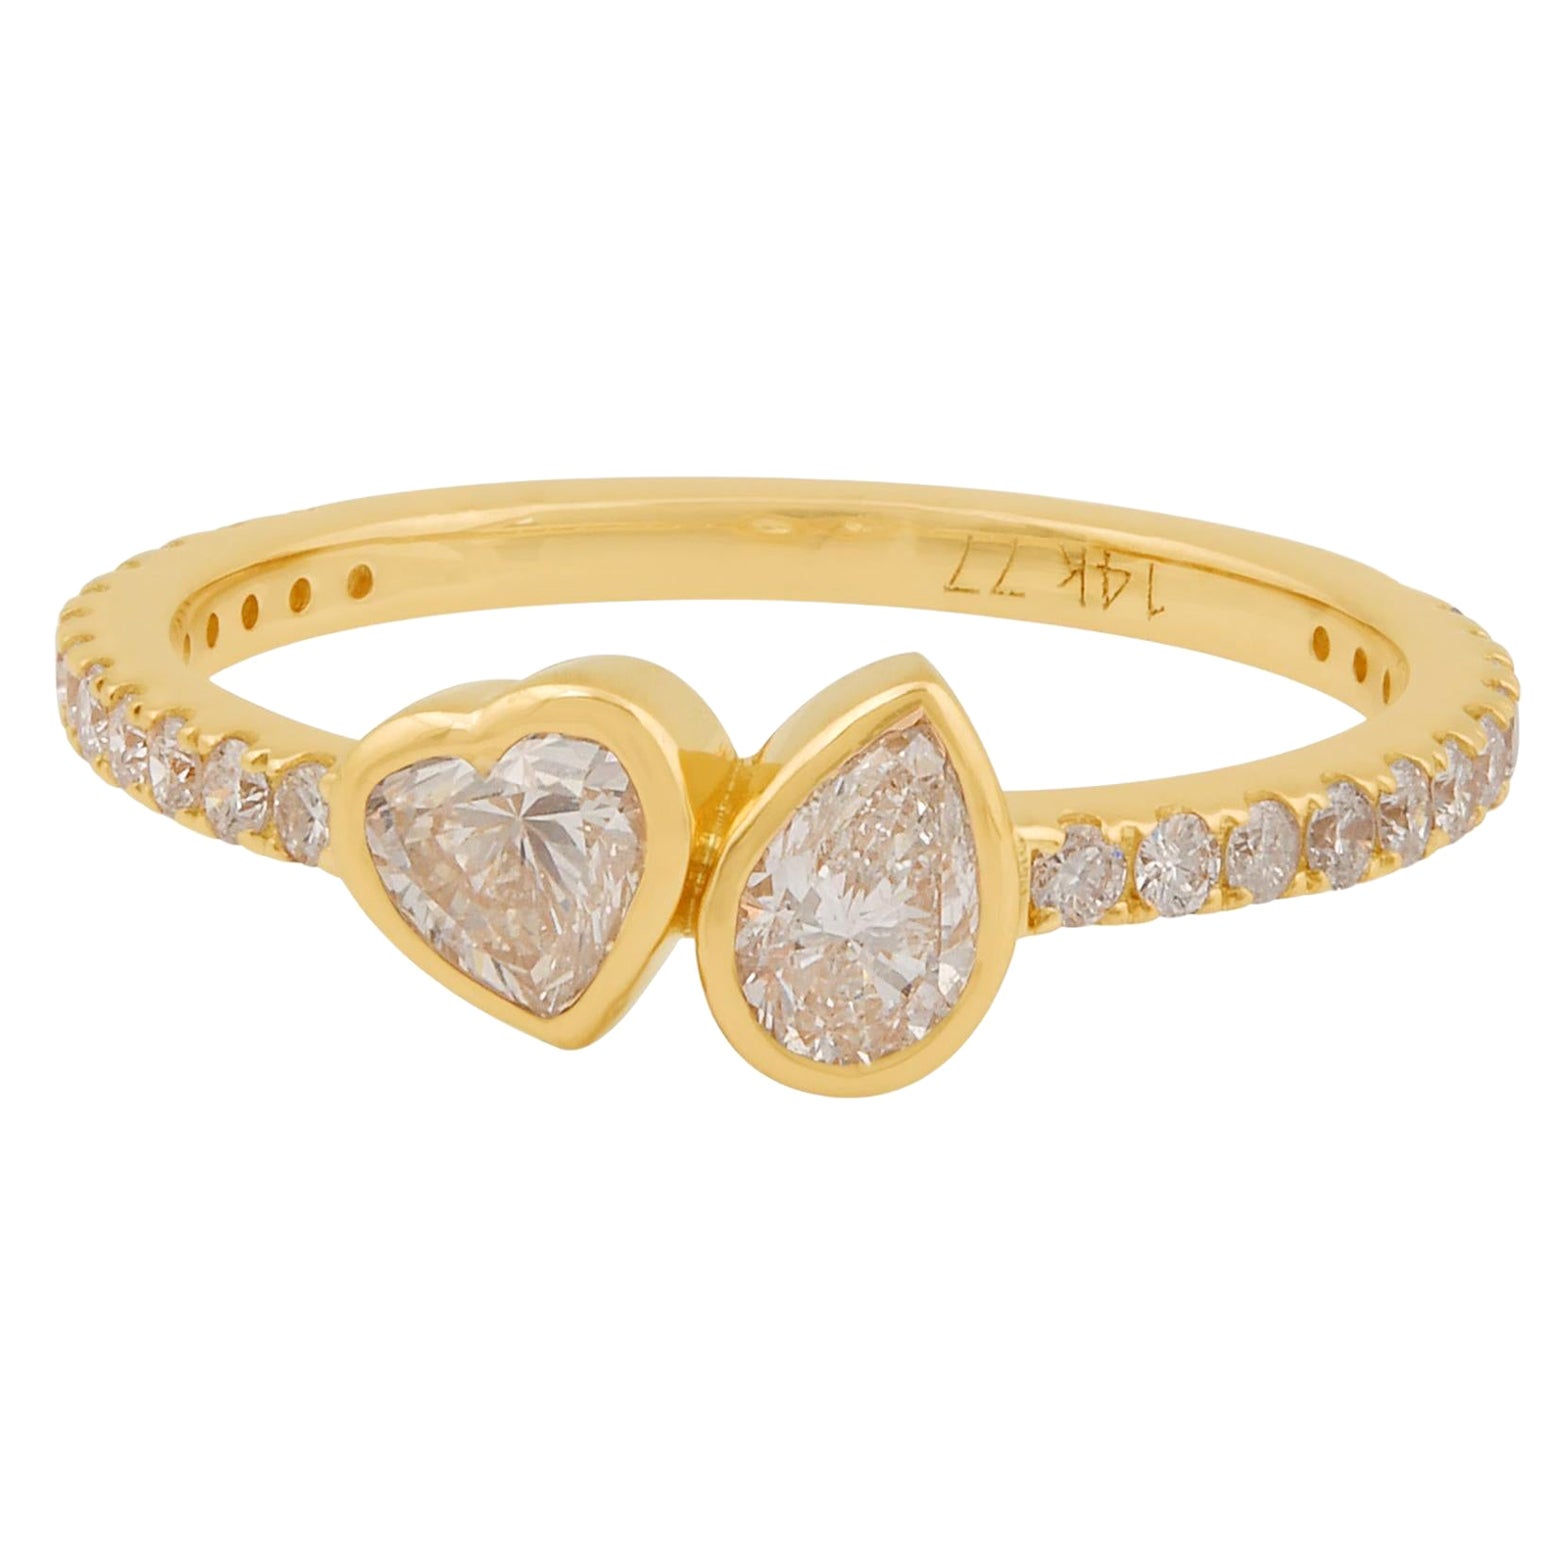 0.77 Carat Pear & Heart Cut Diamond Band Ring 14k Yellow Gold Handmade Jewelry For Sale